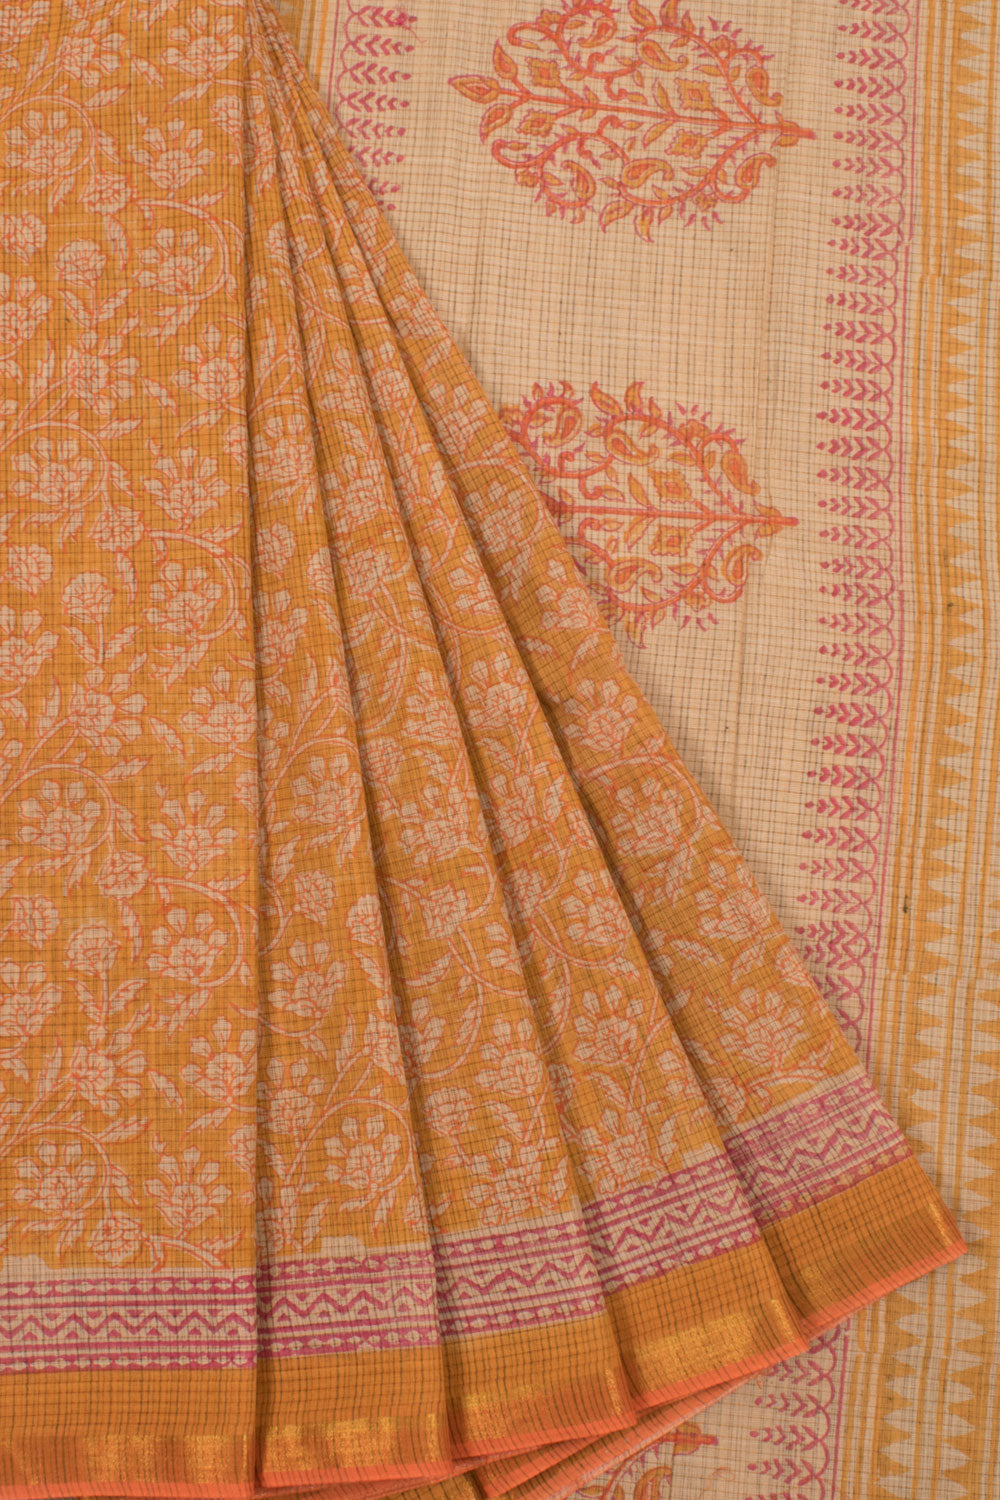 Hand Block Printed Khadi Cotton Saree with Floral Motifs and Zari Border 